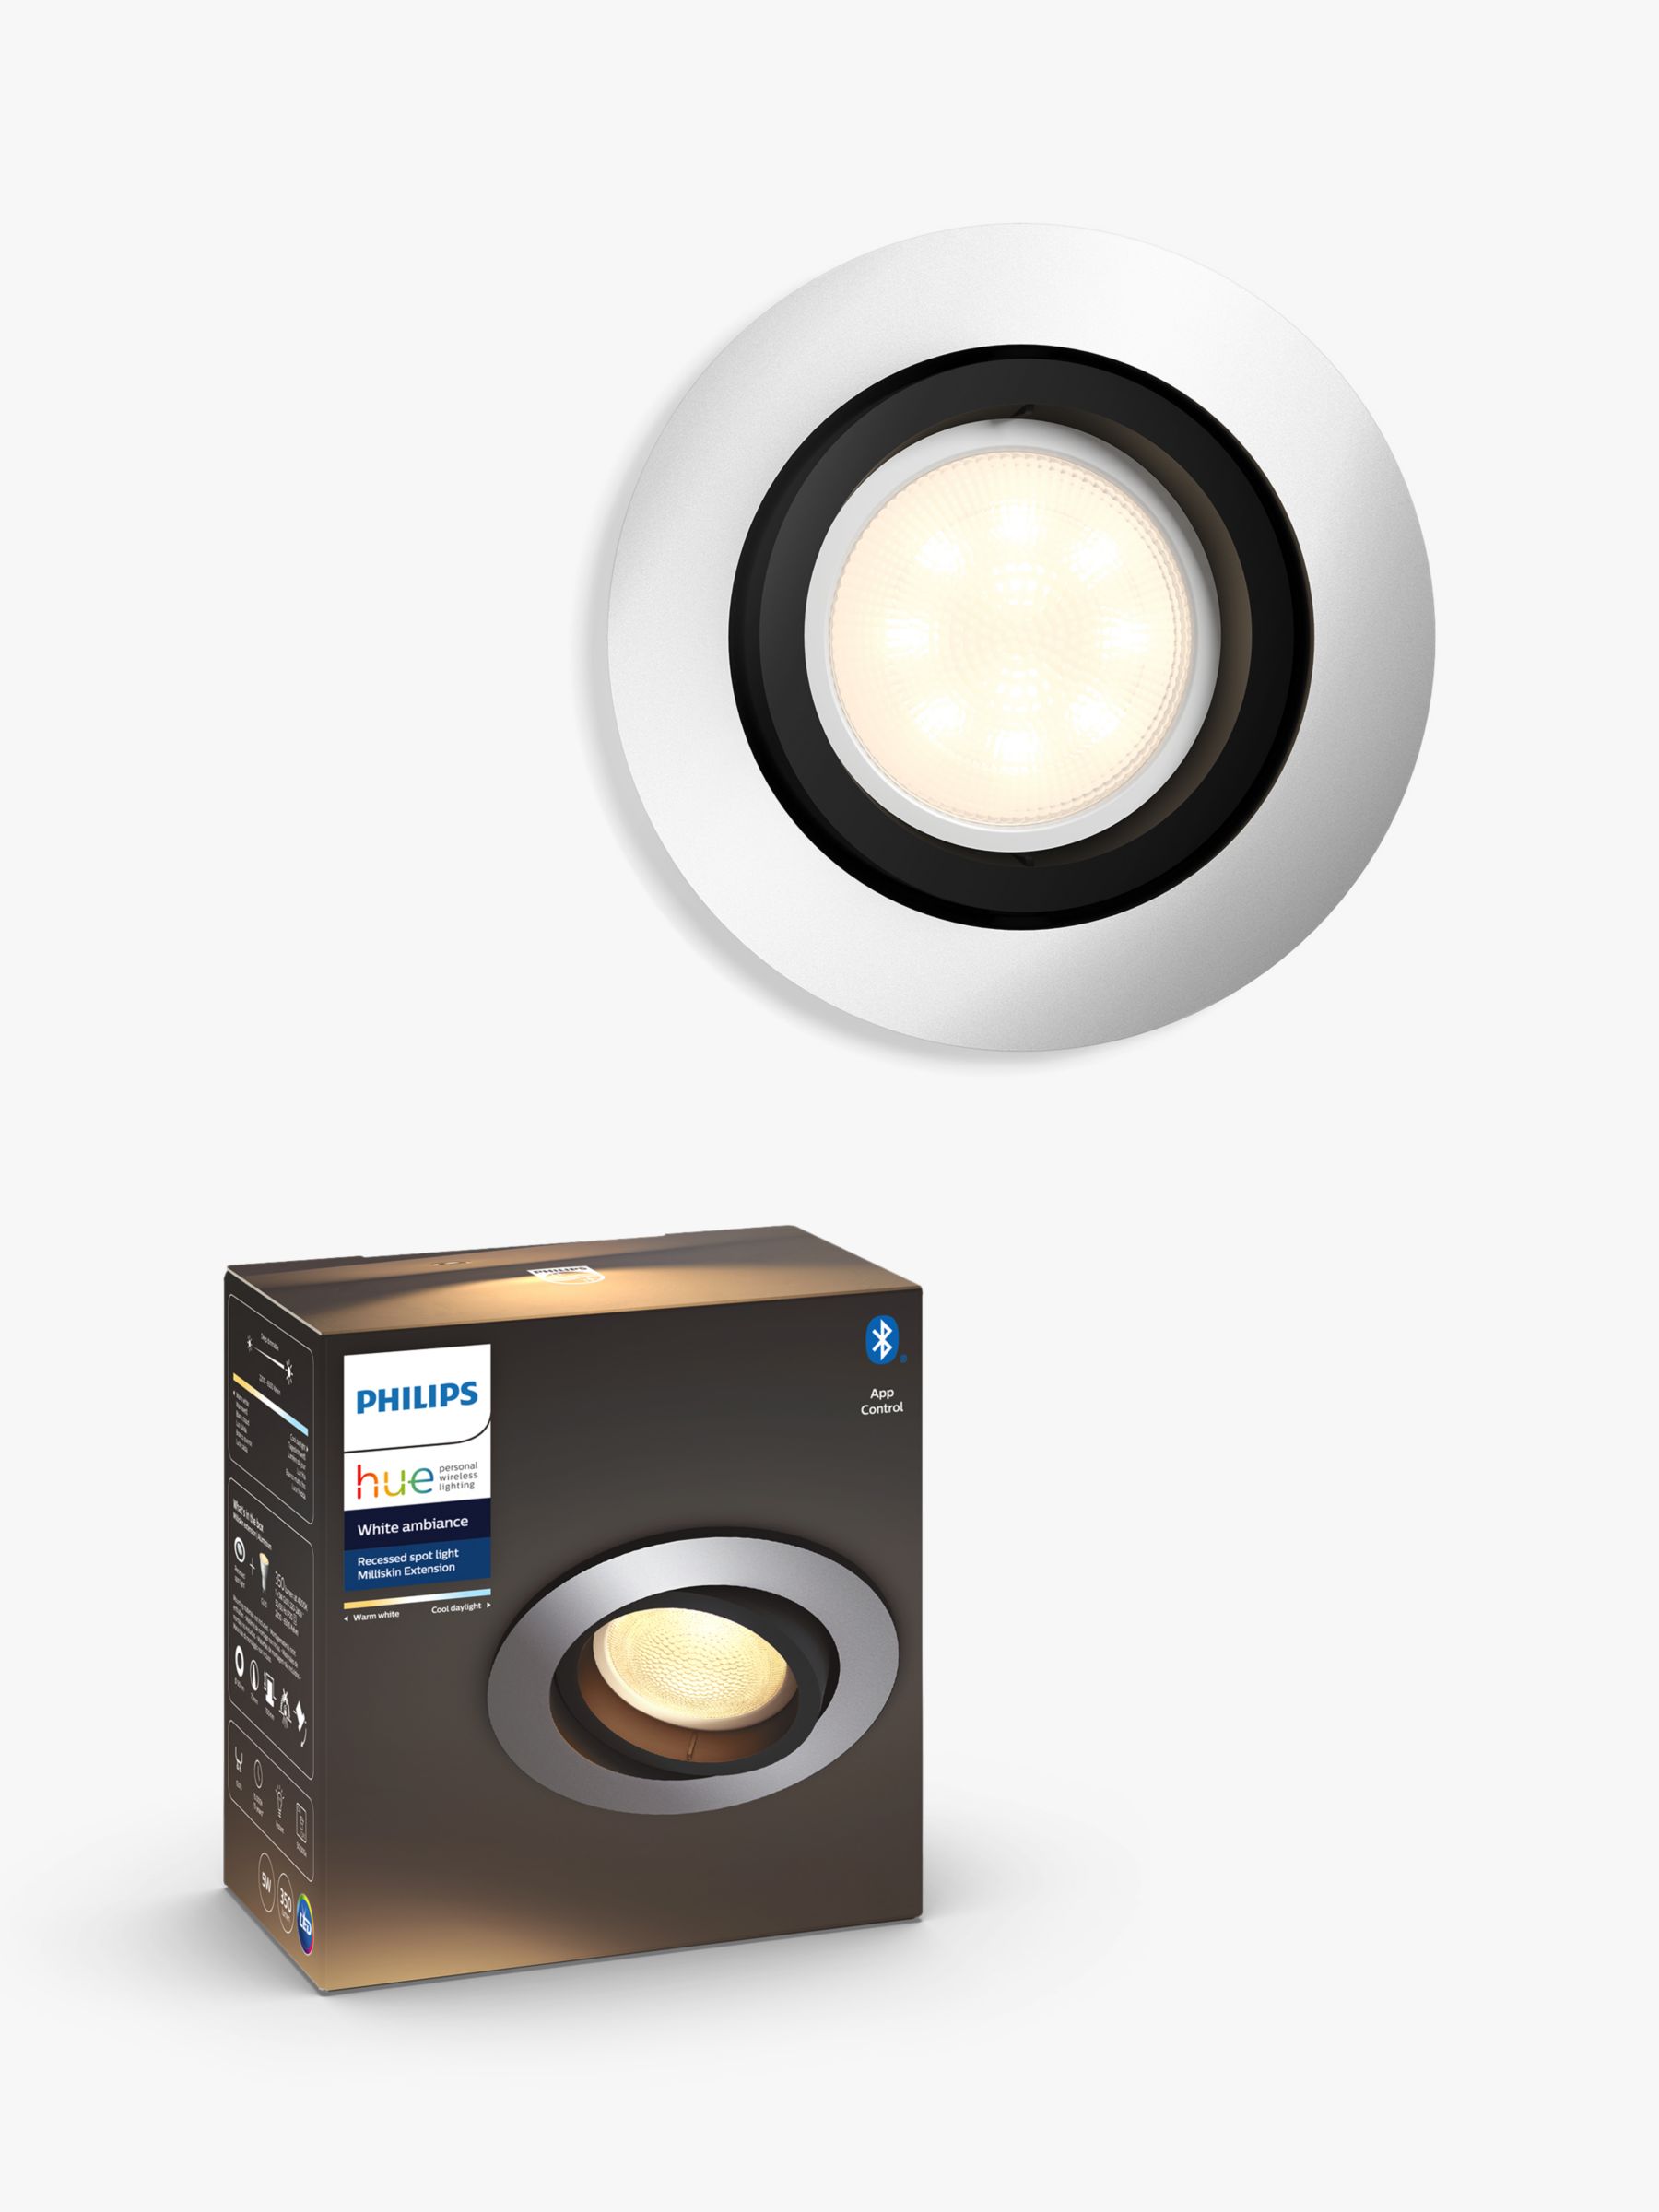 Photo of Philips hue white ambiance milliskin gu10 led recessed smart spotlight with bluetooth